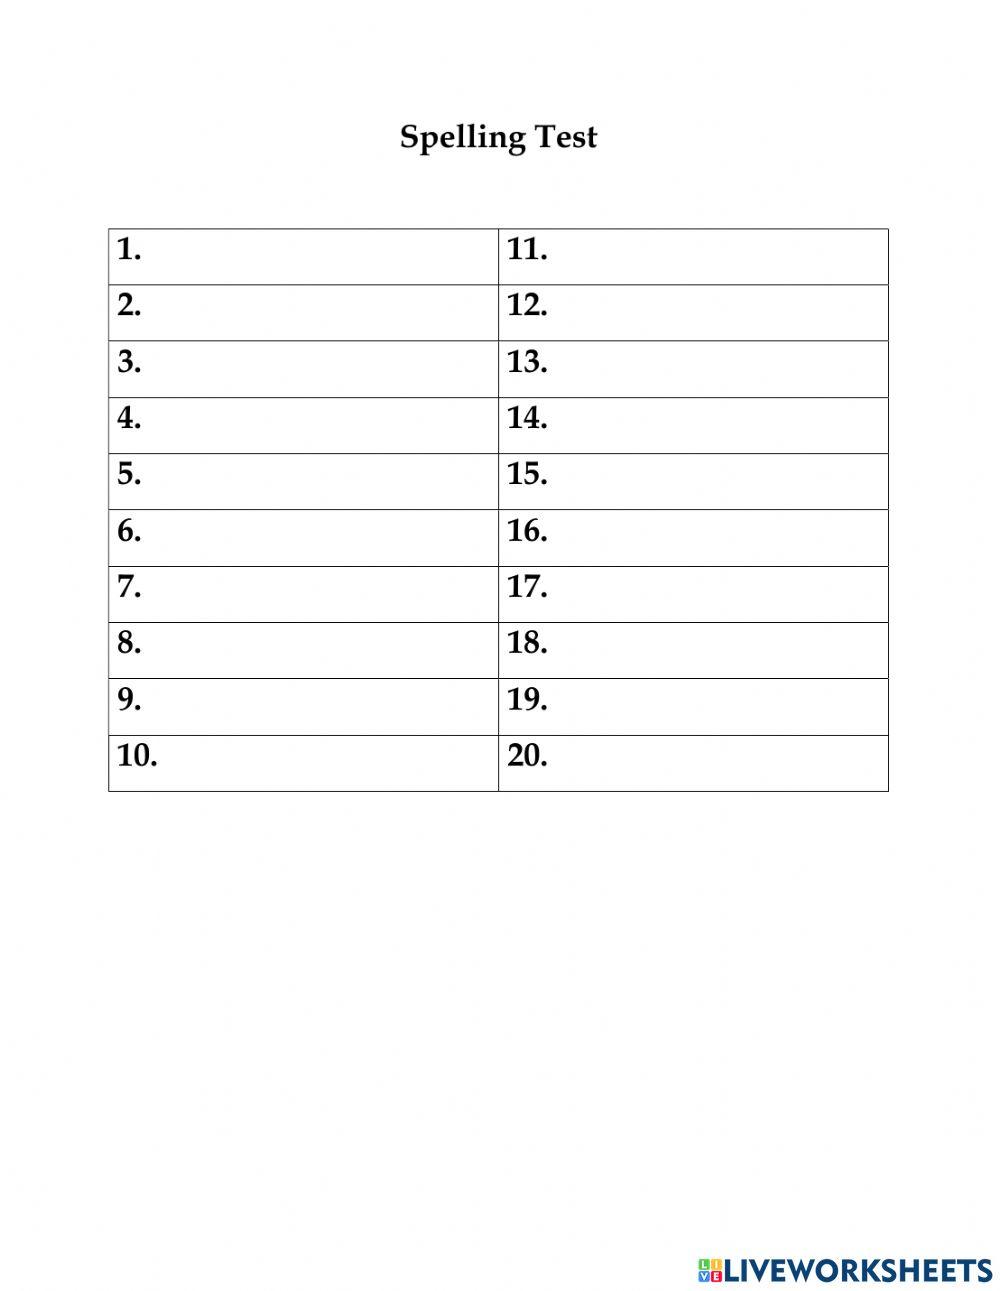 Spelling Test 3 (YL7)